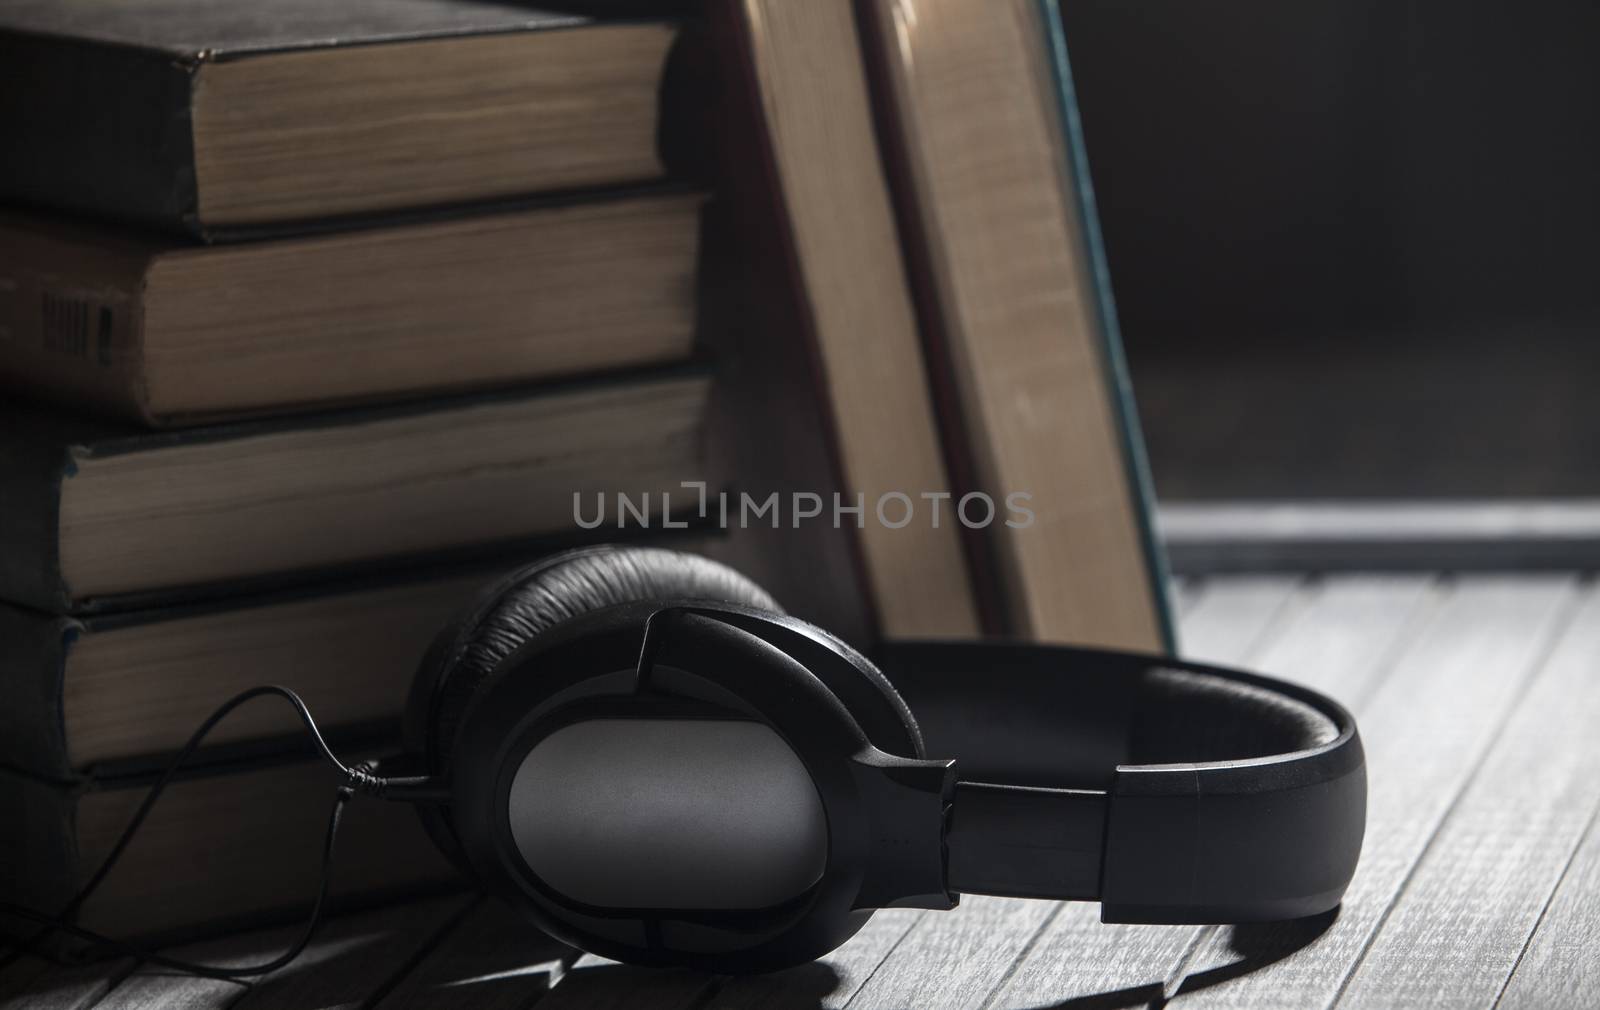 Listen adudiobooks by snep_photo